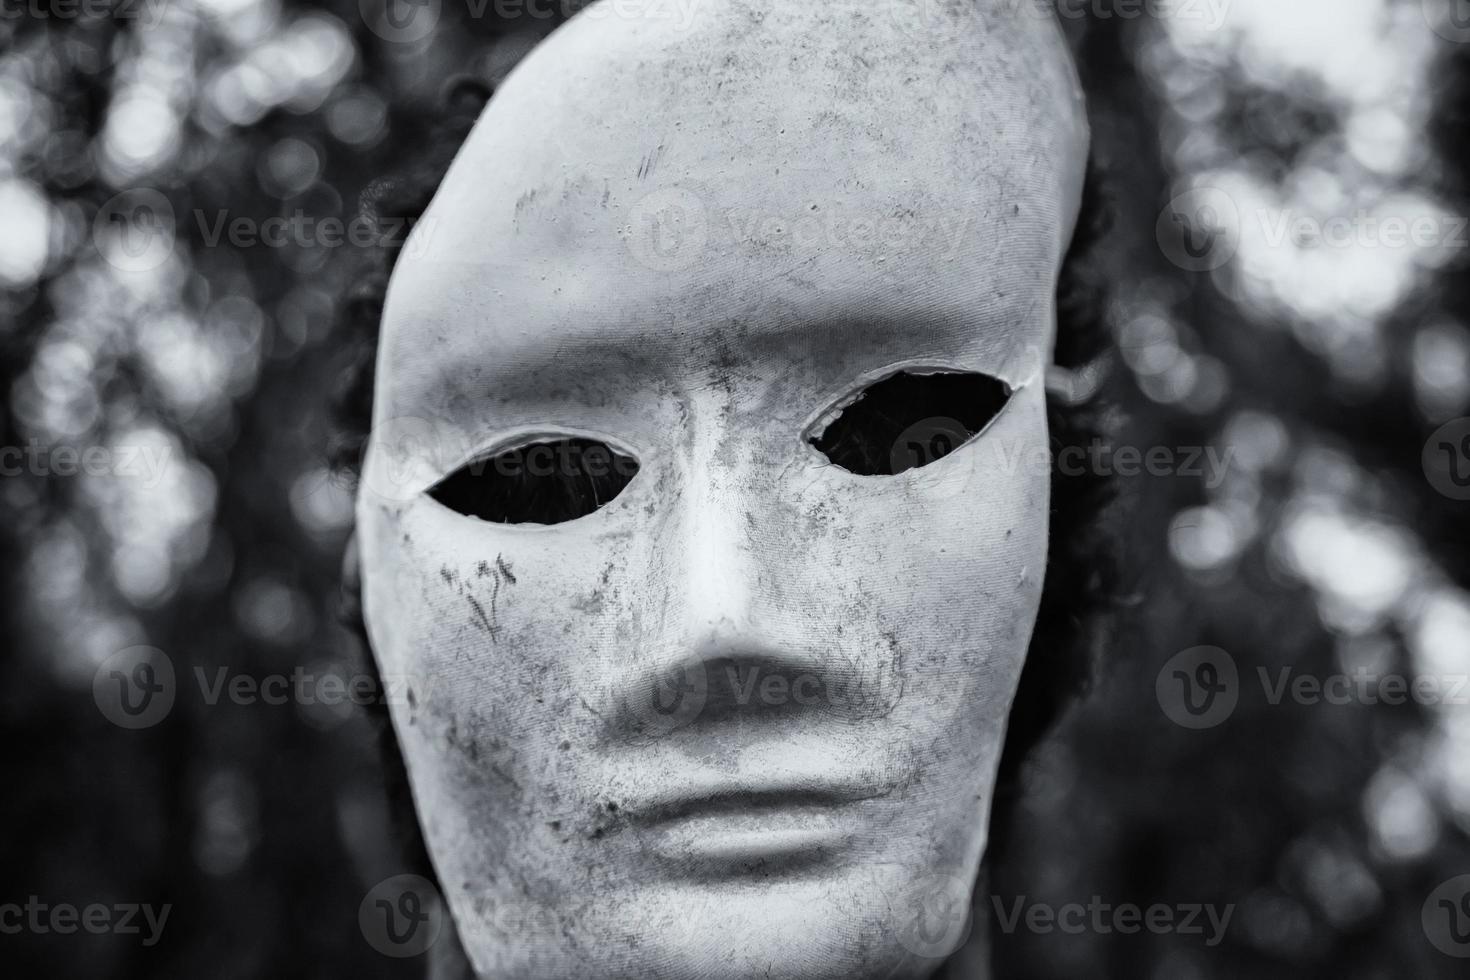 läskig mask i skogen foto